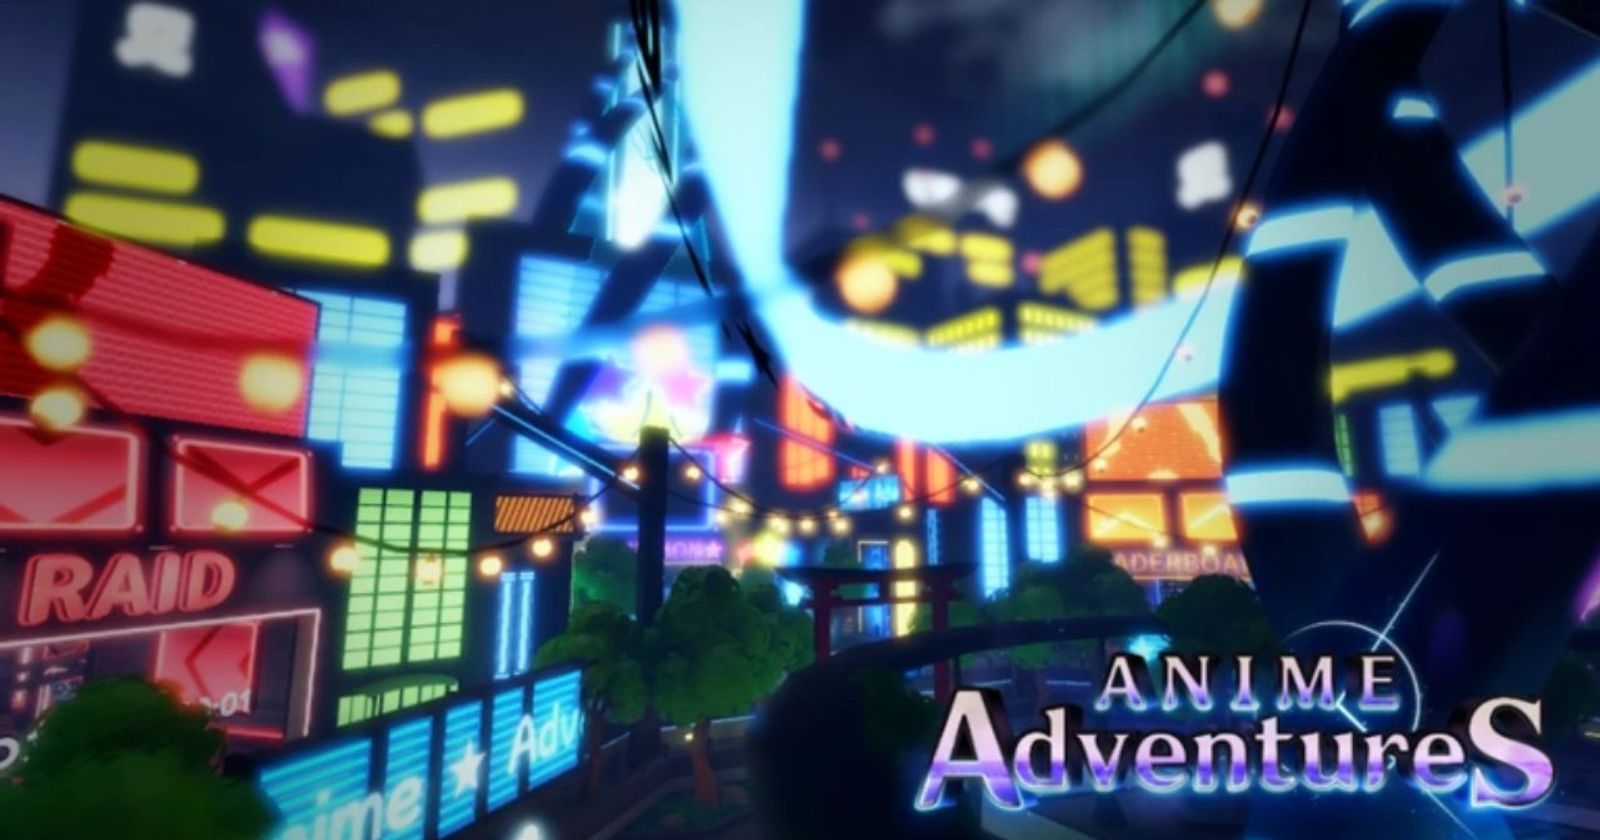 I GOT UNIQUE SHIGARAKI - Anime Adventures 